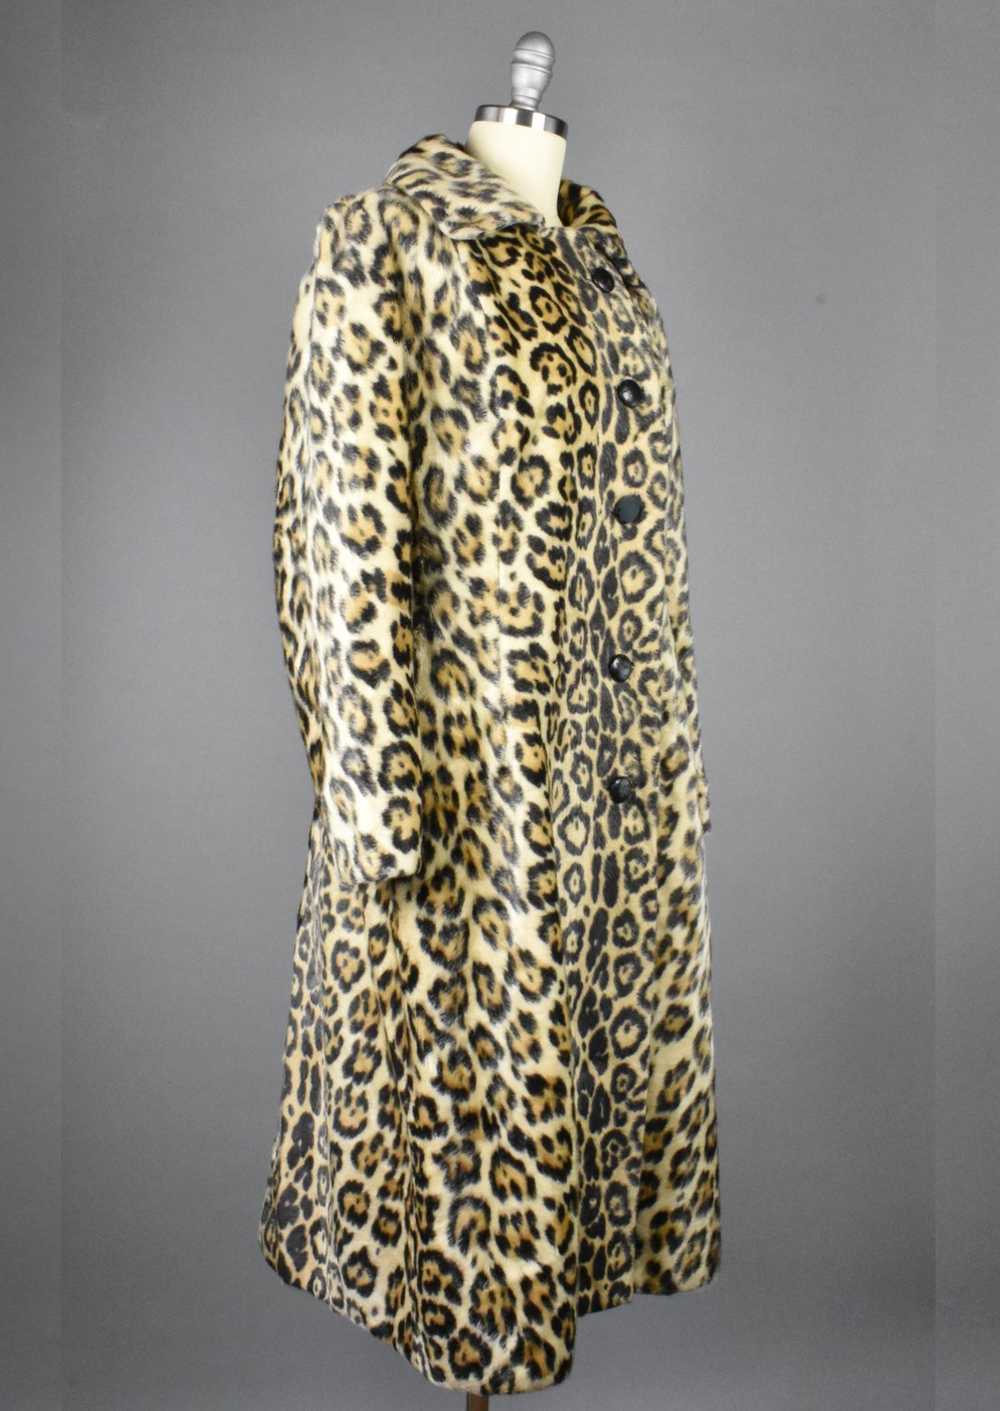 Leopard Print Faux Fur Coat by Safari - image 2